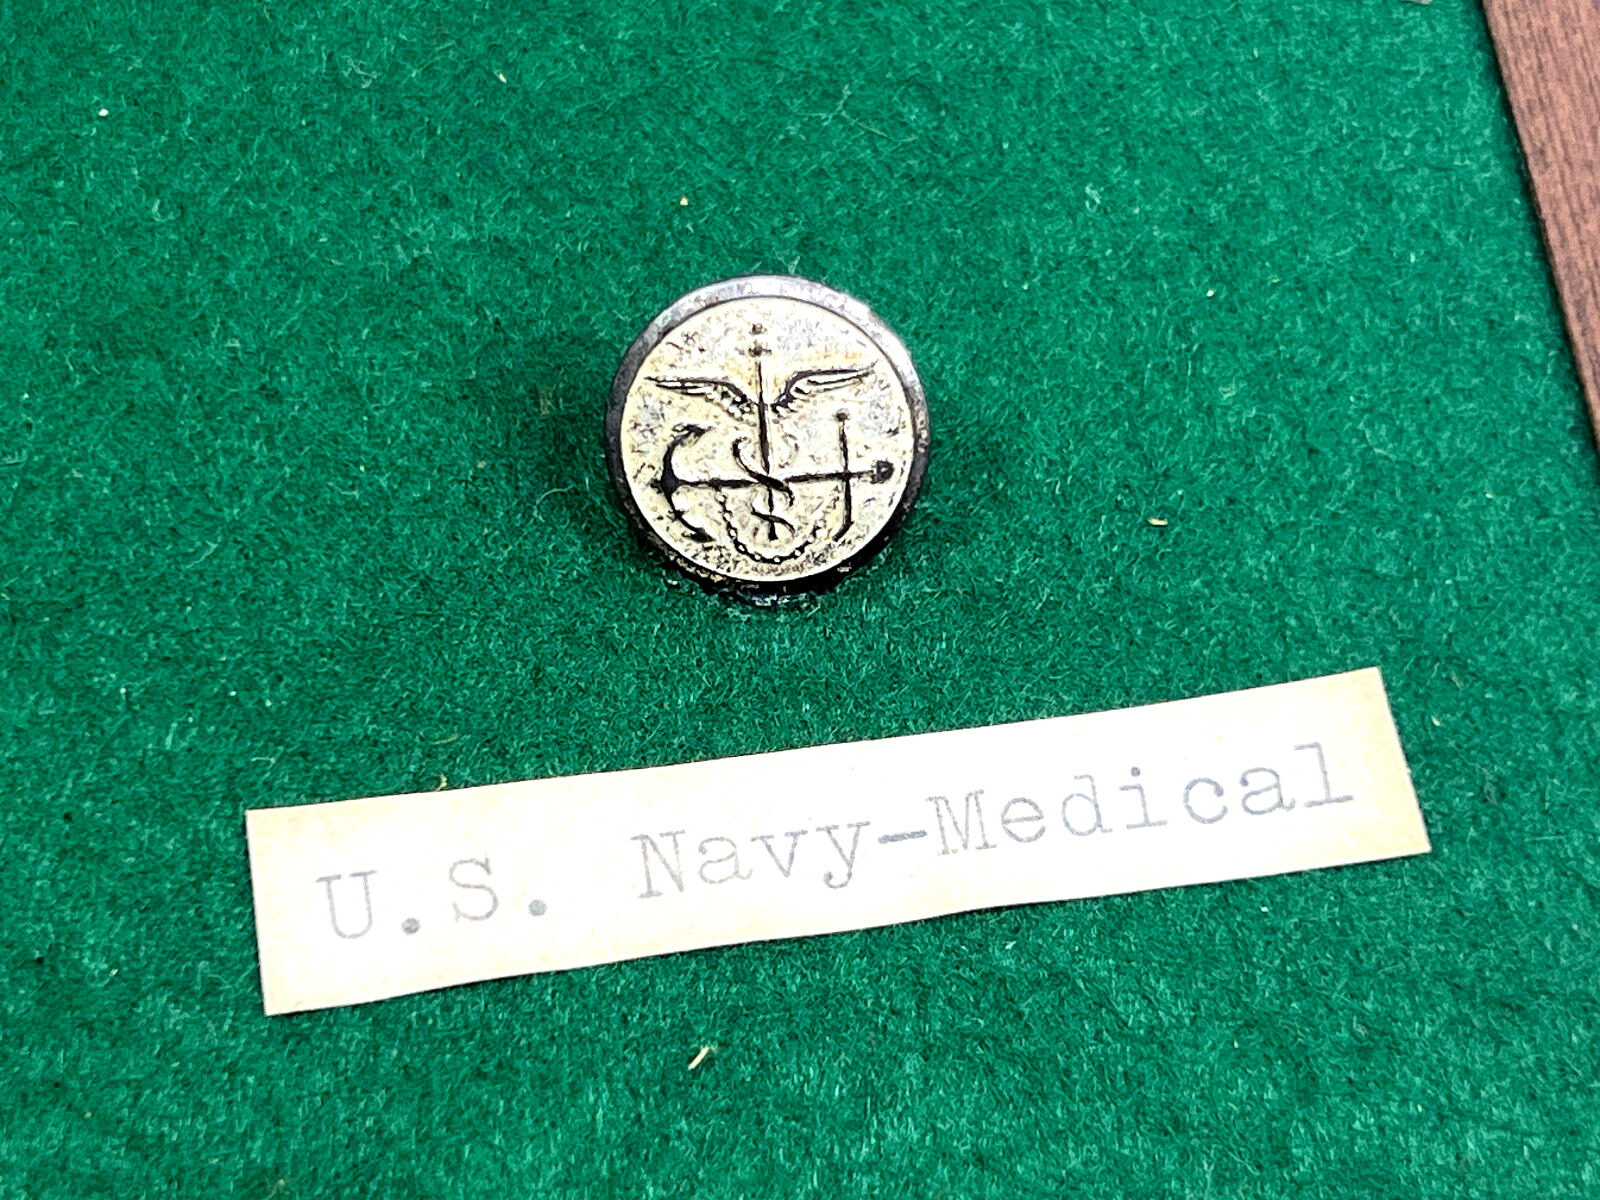 Antique WW1 WW2 US Navy Medical Button pin shirt coat belt pants